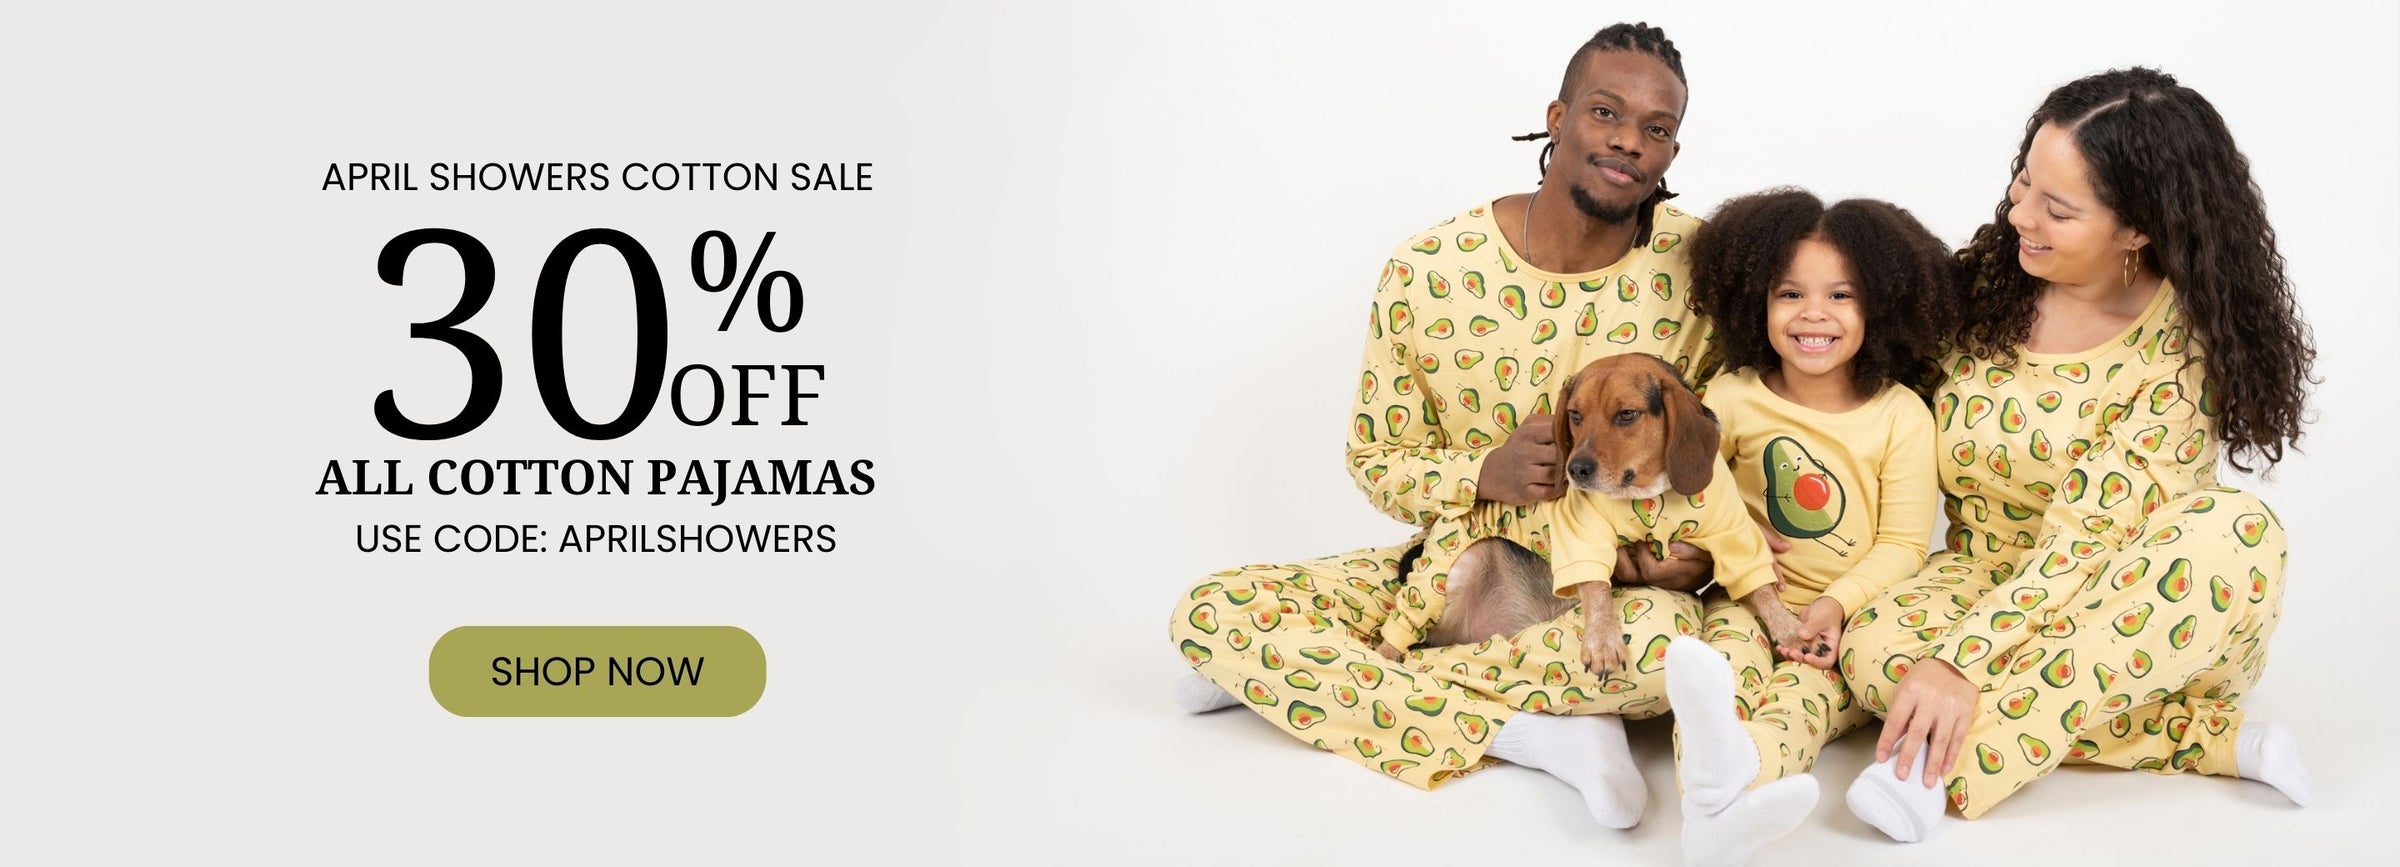 Cotton sale 30% off all cotton pajamas, use code Aprilshower; matching family wearing yellow avocado print pajamas